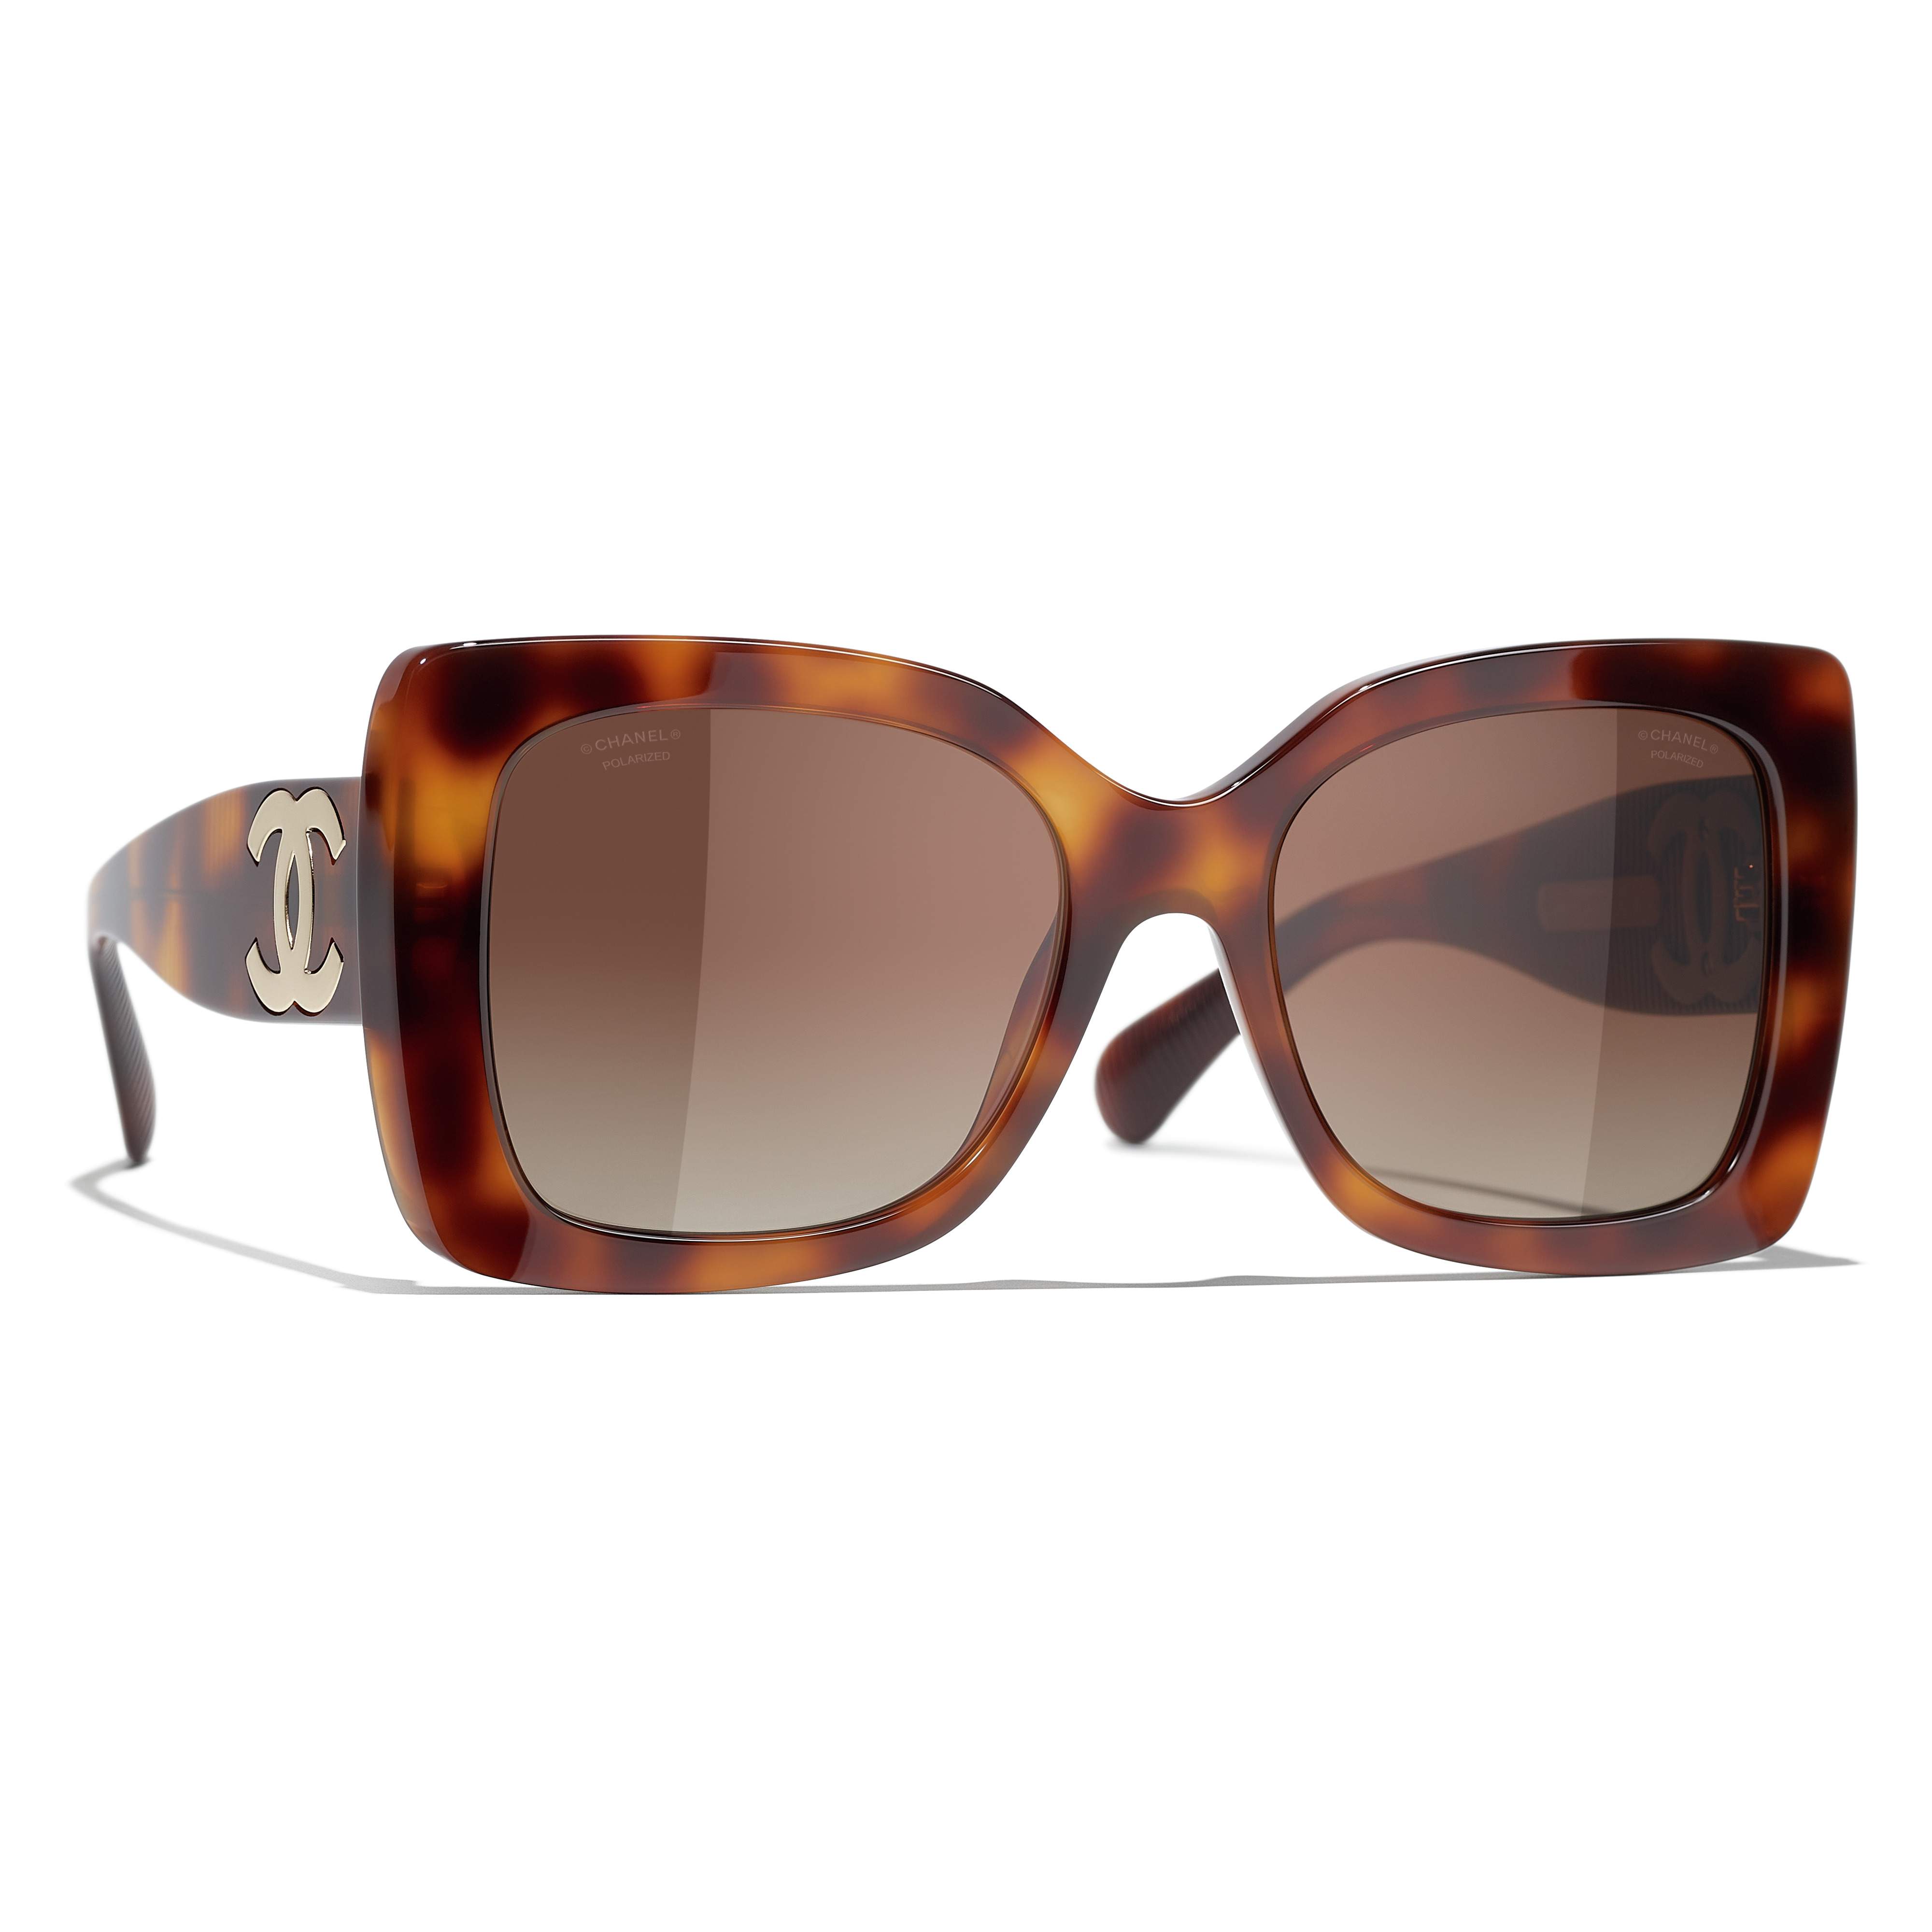 Sunglasses CHANEL CH5494 1295S9 53-18 Havana in stock, Price 275,00 €